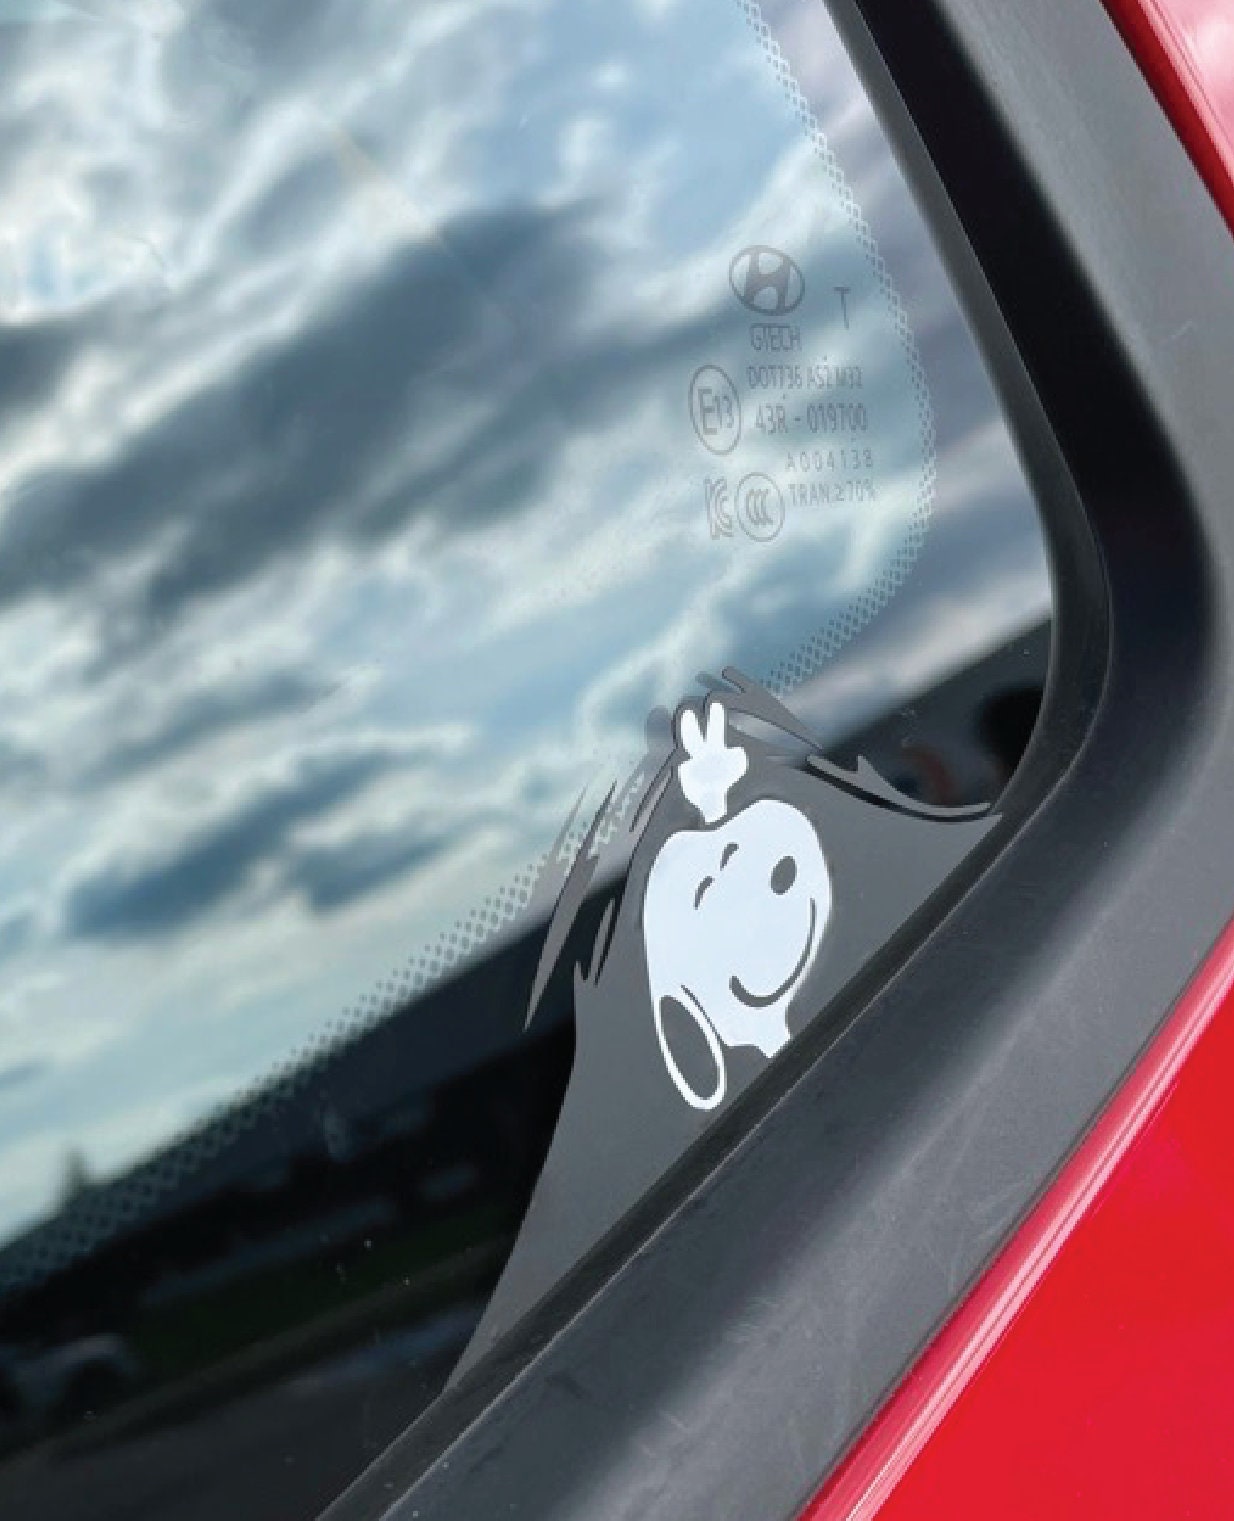 Snoopy Charly 90x33cm CW012 + Gratis Aufkleber - Auto Wohnmobil